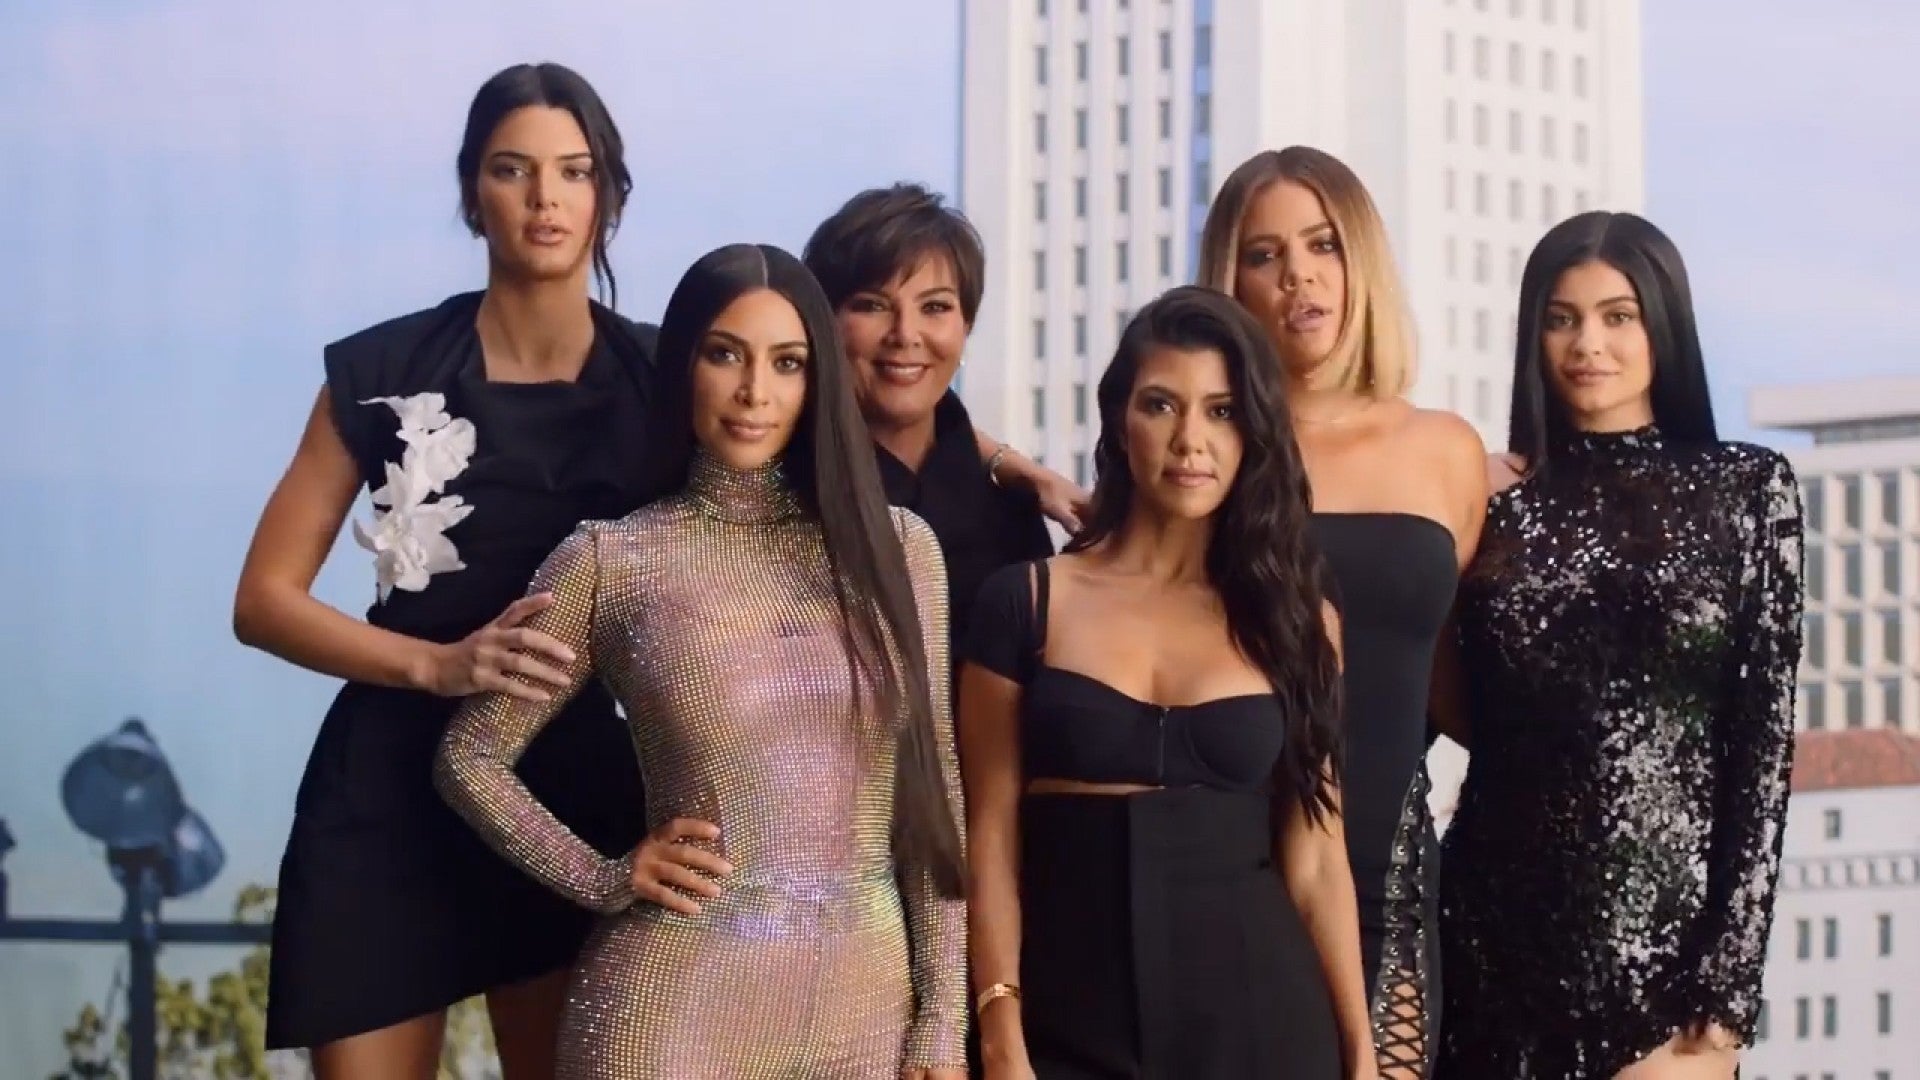 PICS: Kim Kardashian and Paris Hilton recreate iconic 'Queens of